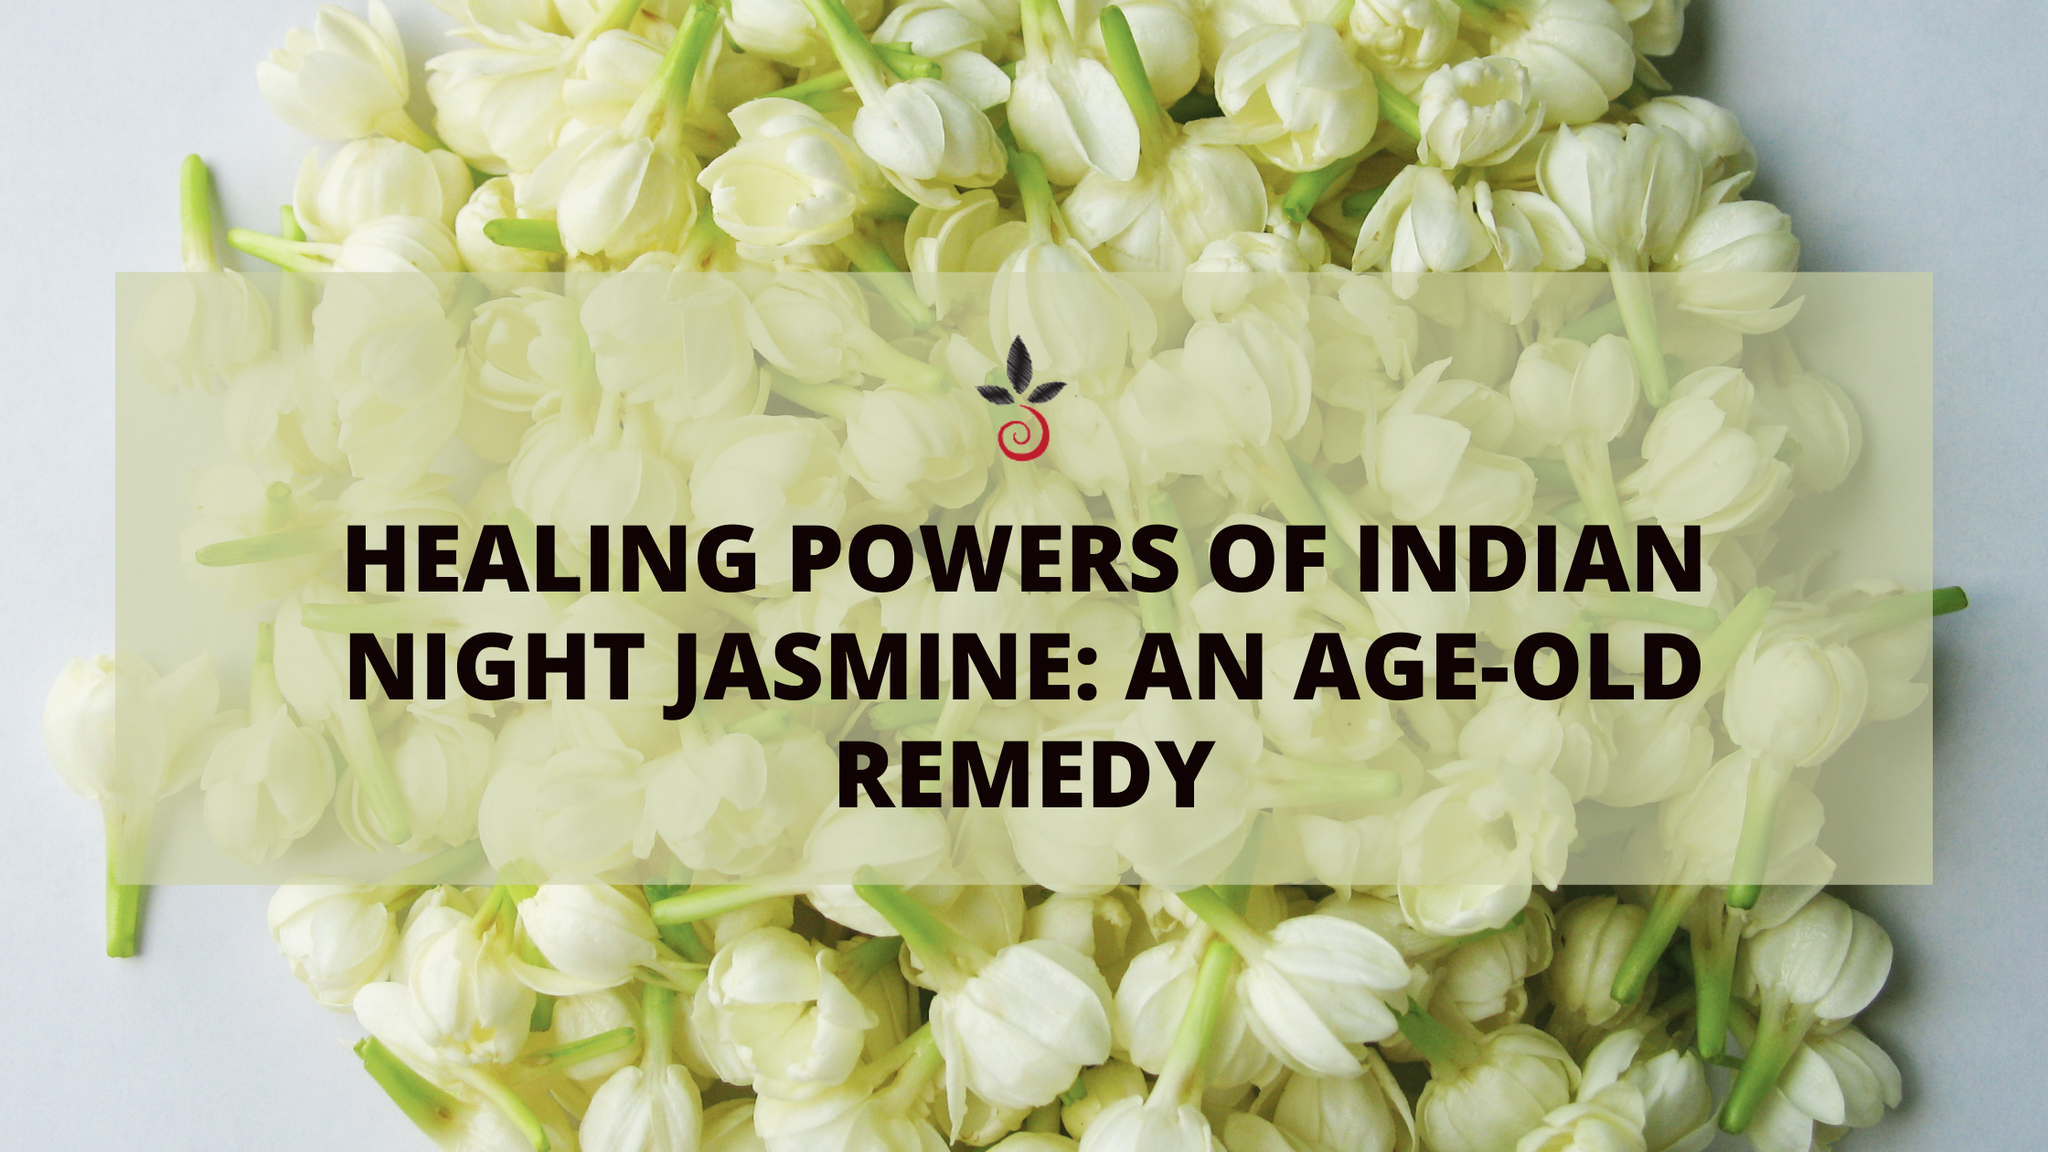 Medicinal benefits of Indian Night Jasmine